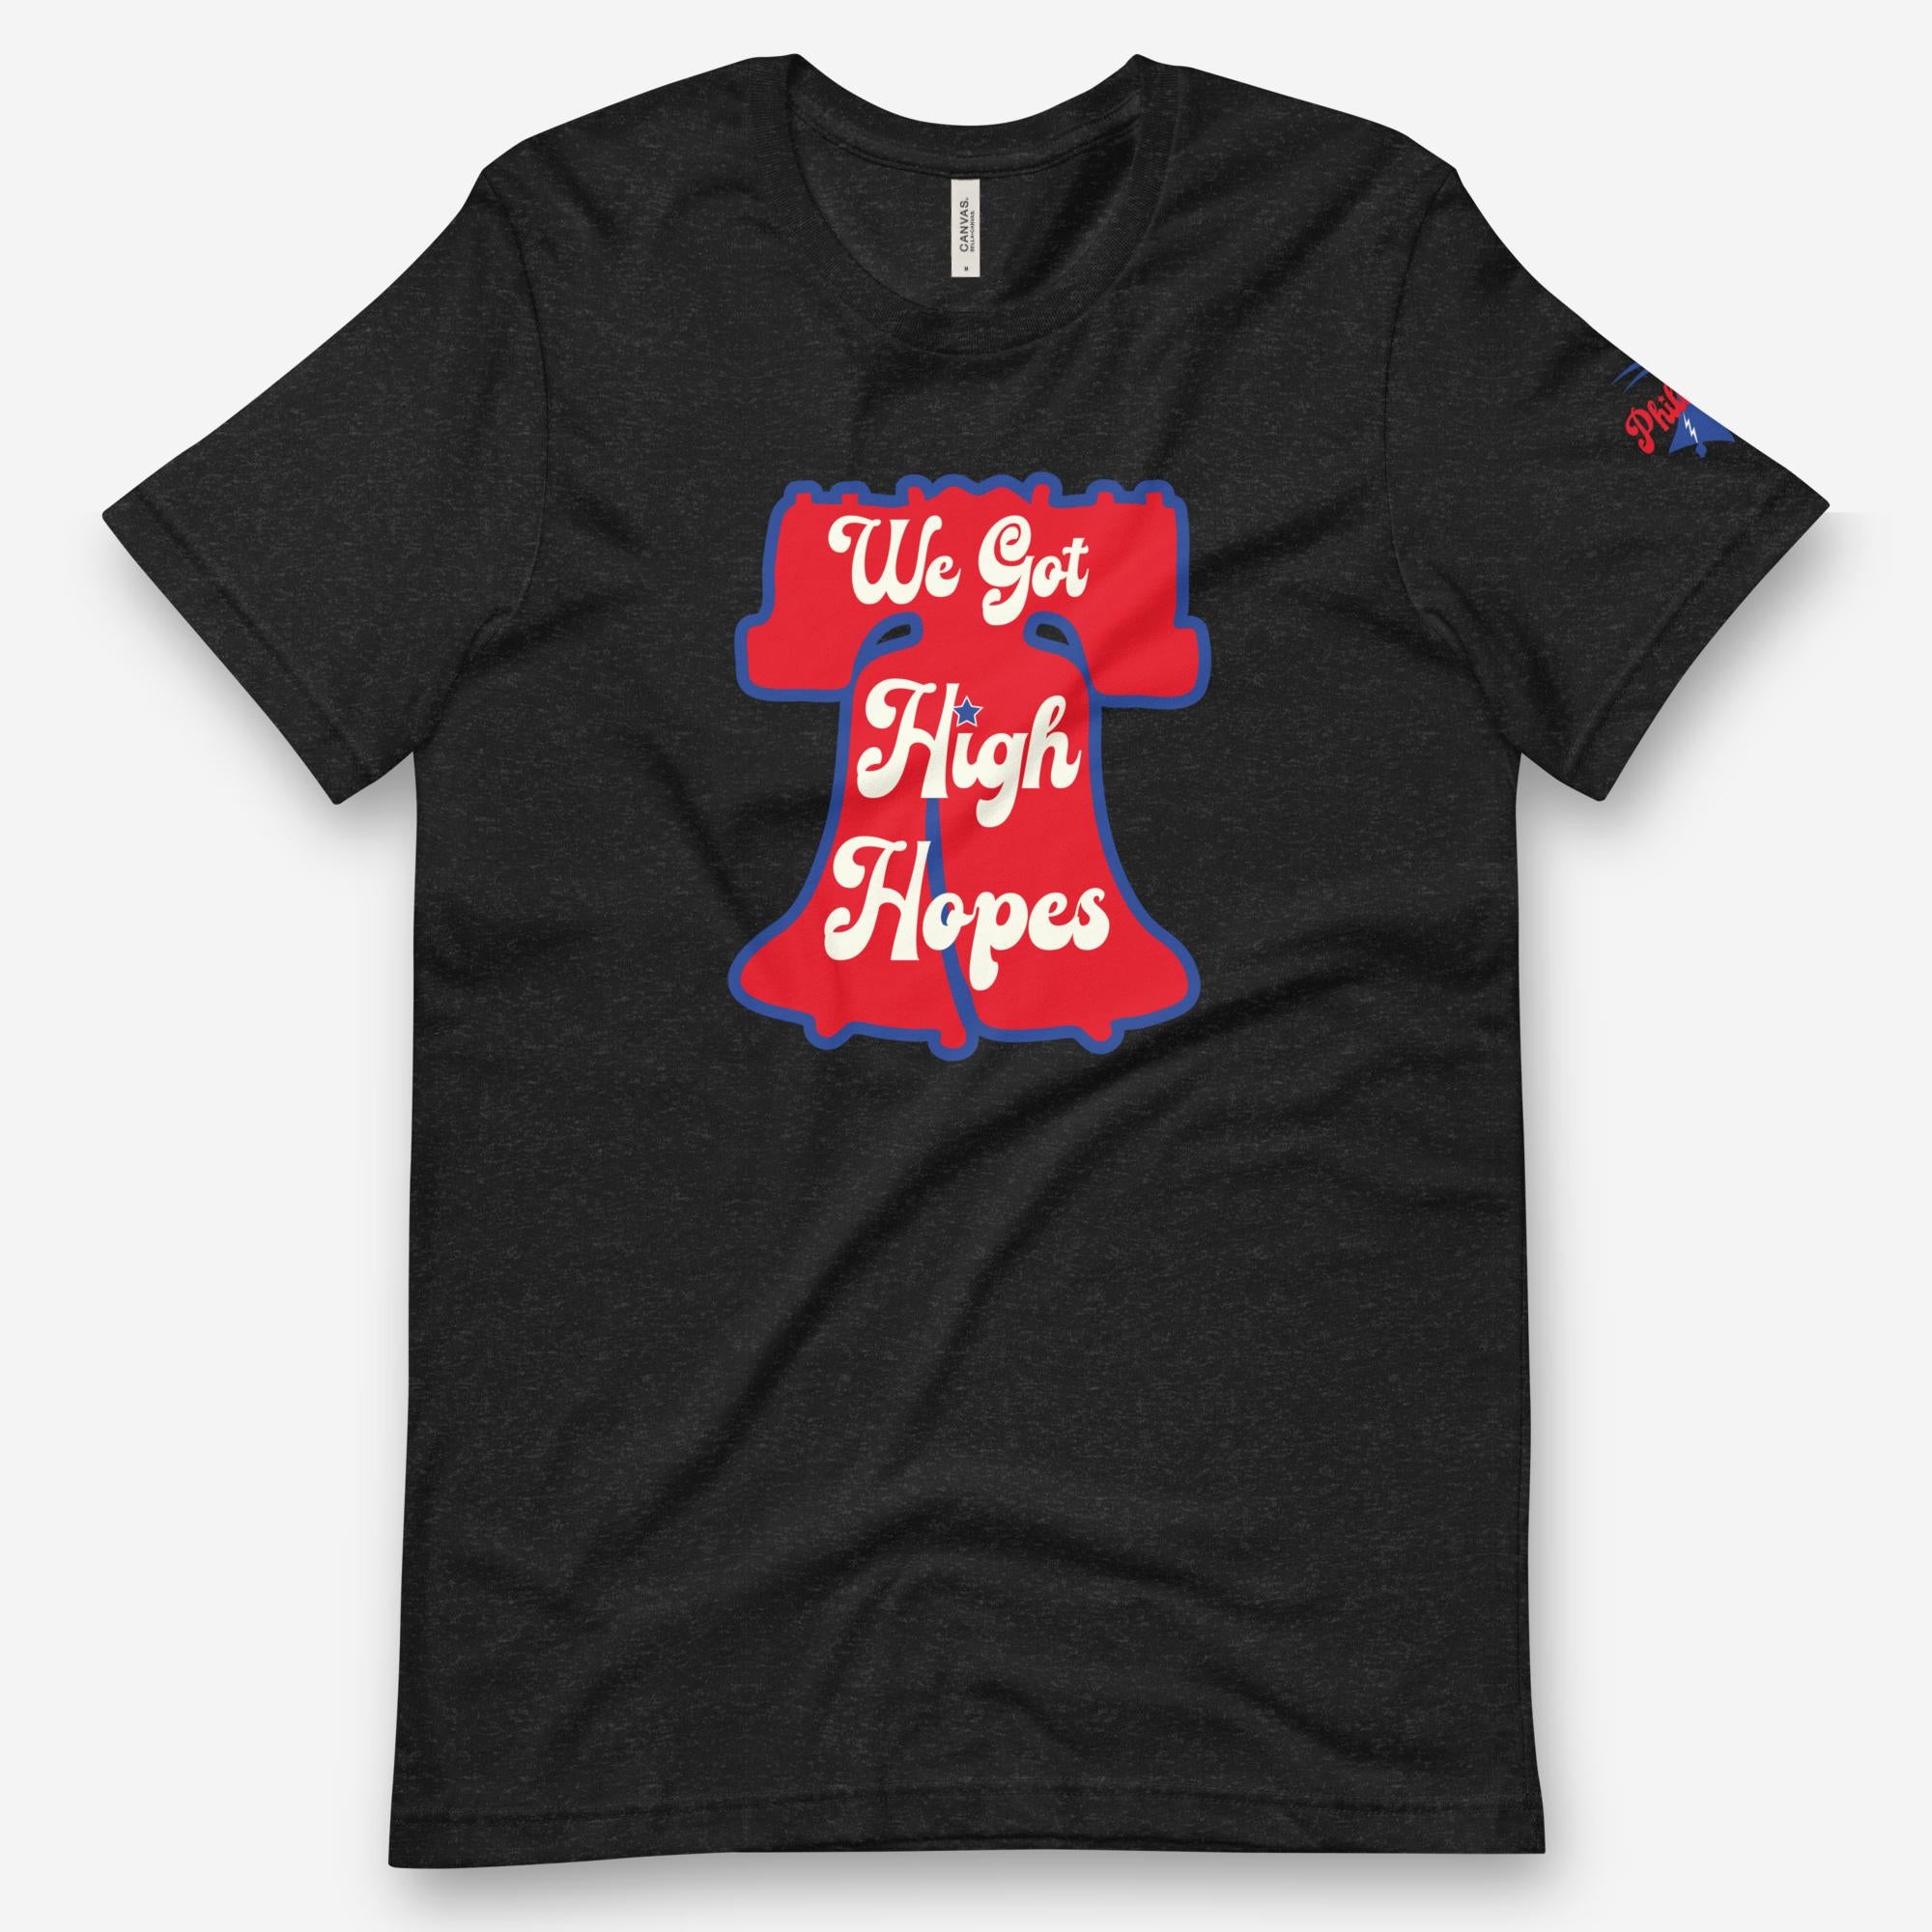 "High Hopes" Tee